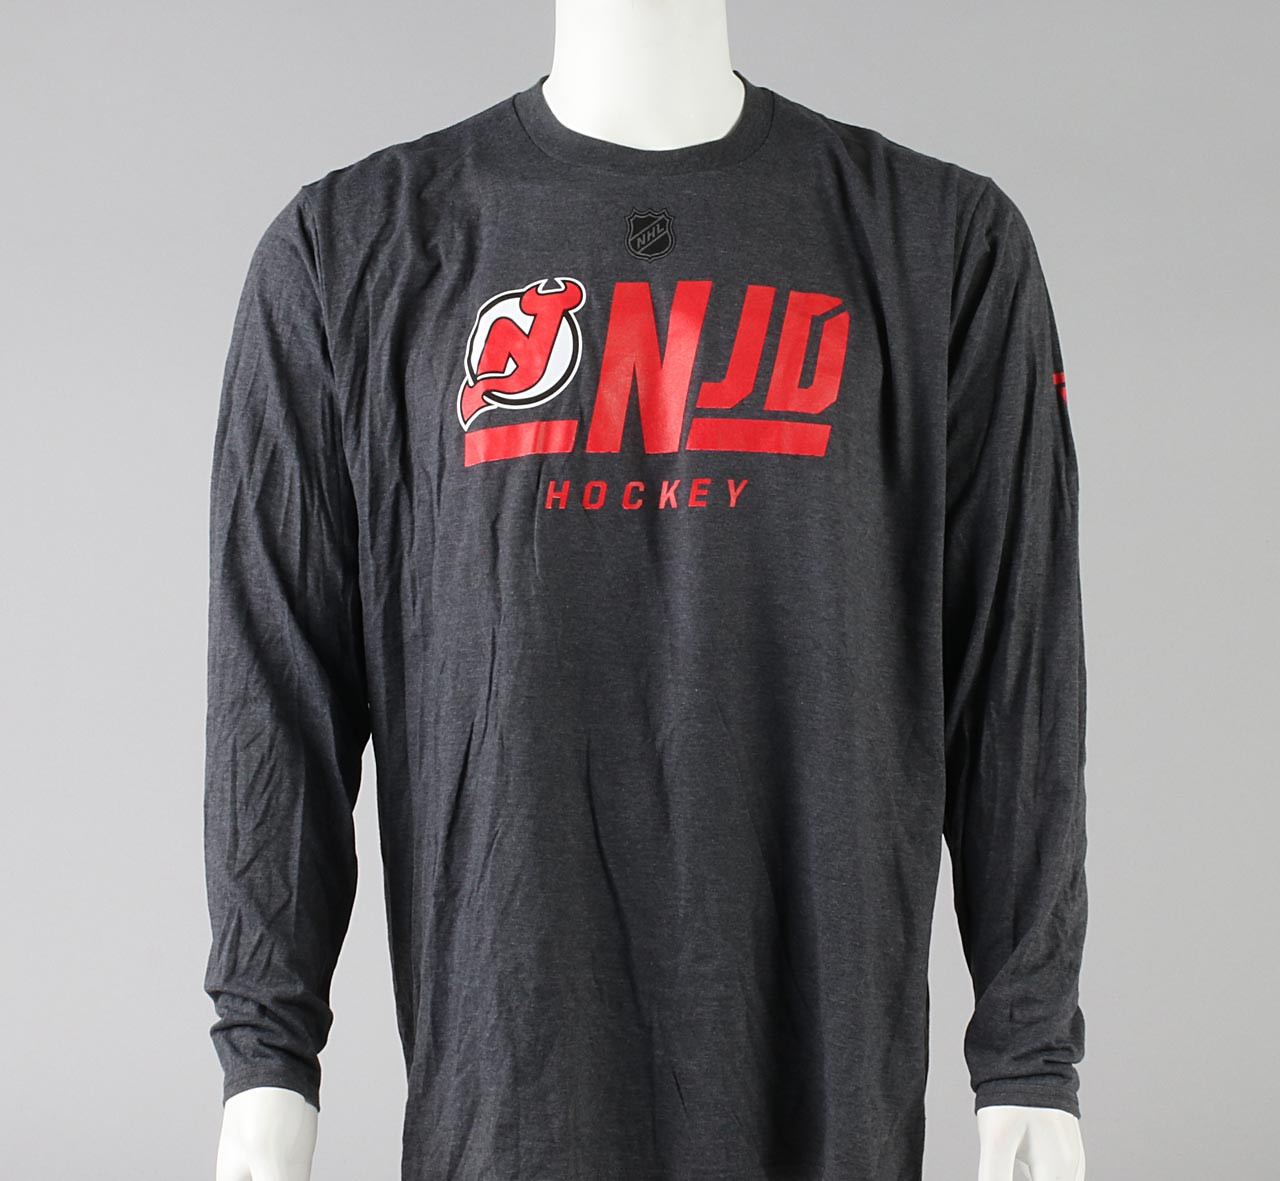 New Jersey Devils X-Large Long Sleeve Shirt - Pro Stock Hockey